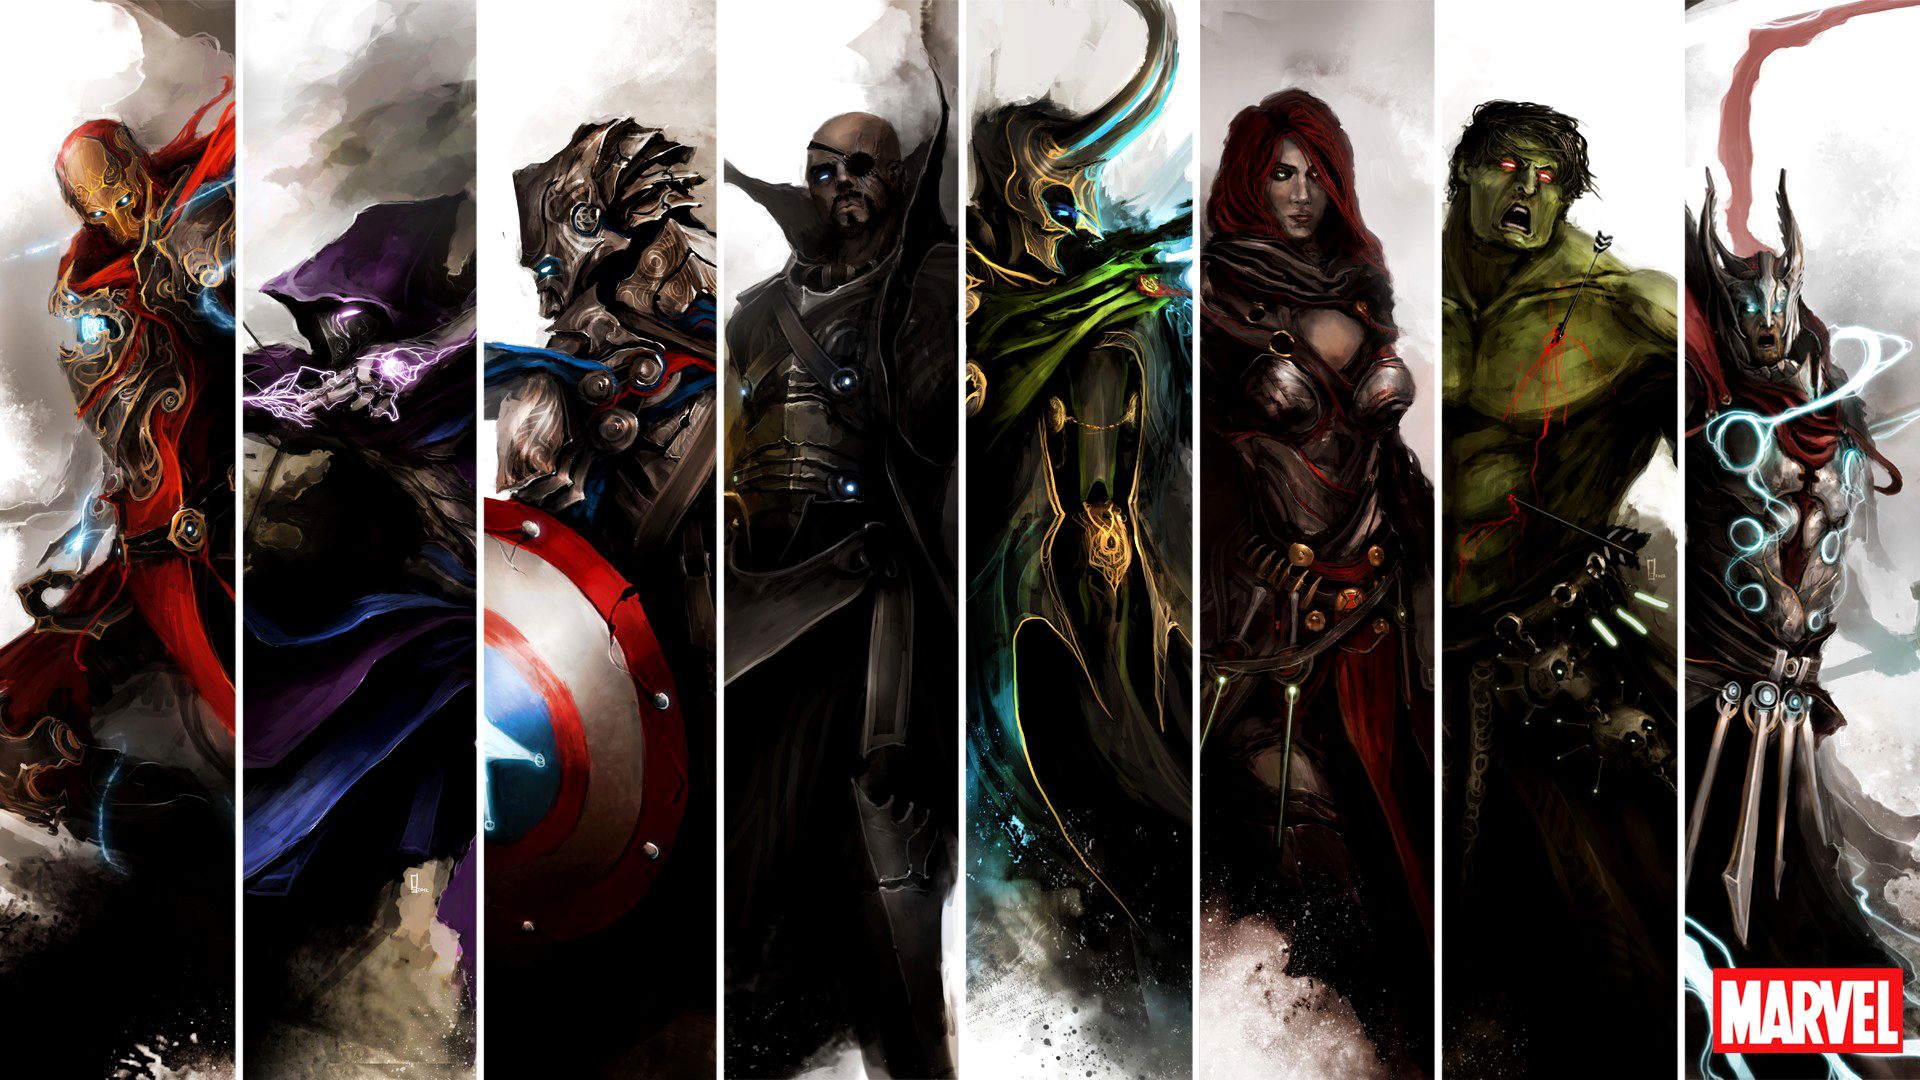 The Avengers Black Widow wallgem Free Download 4k